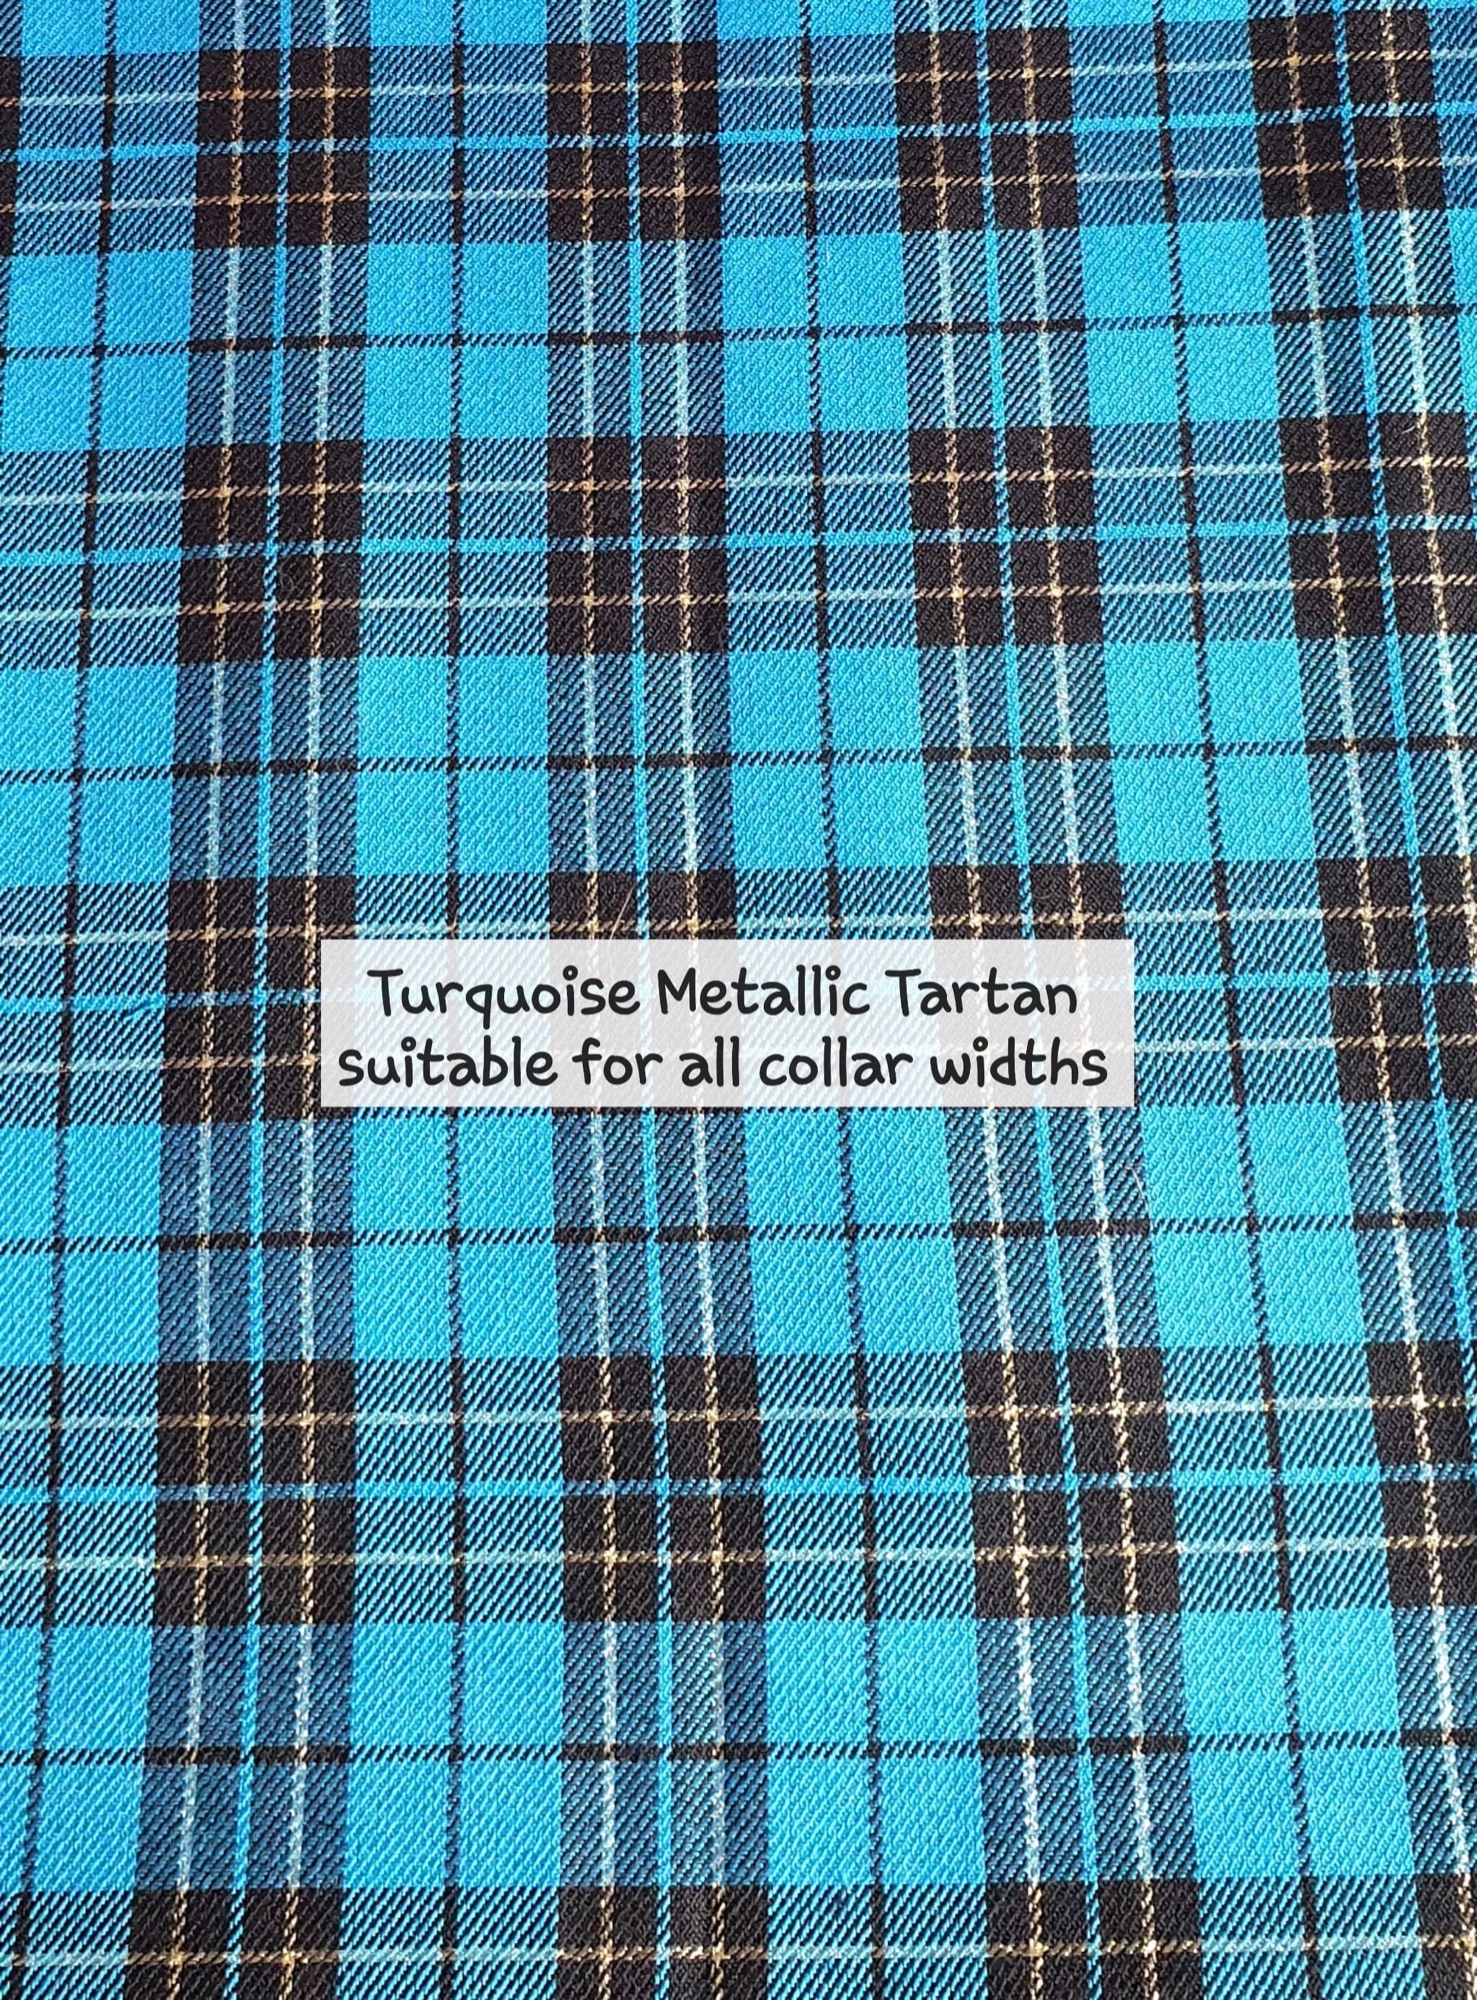 turquoise metallic tartan